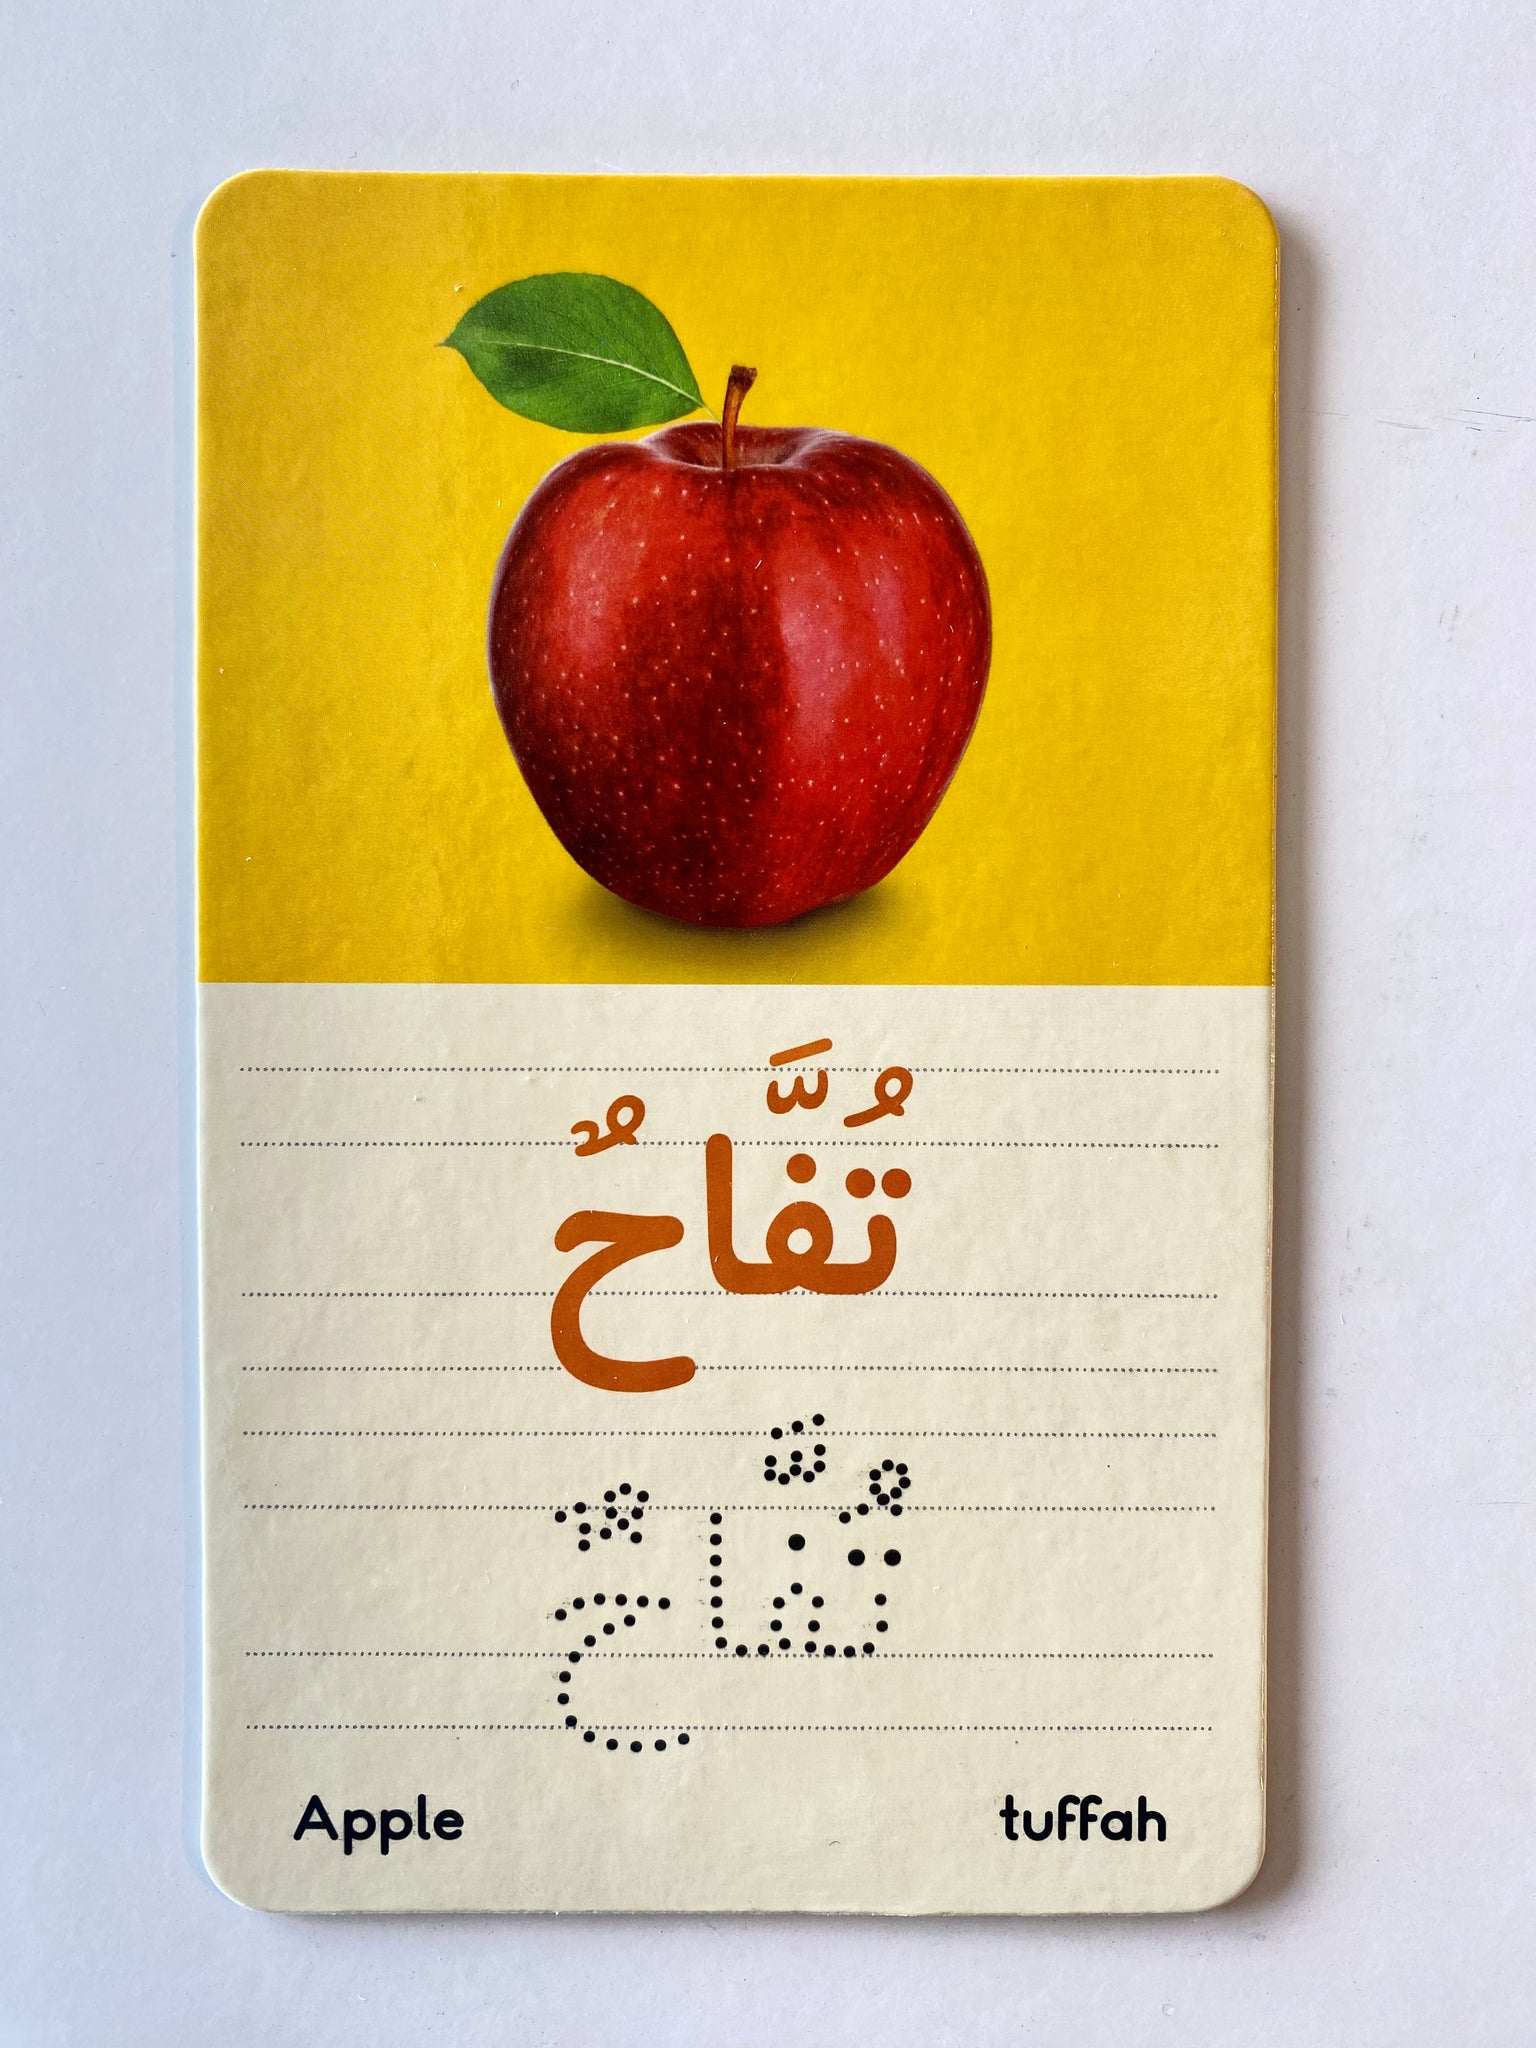 Arabic Words Activity Flash Cards